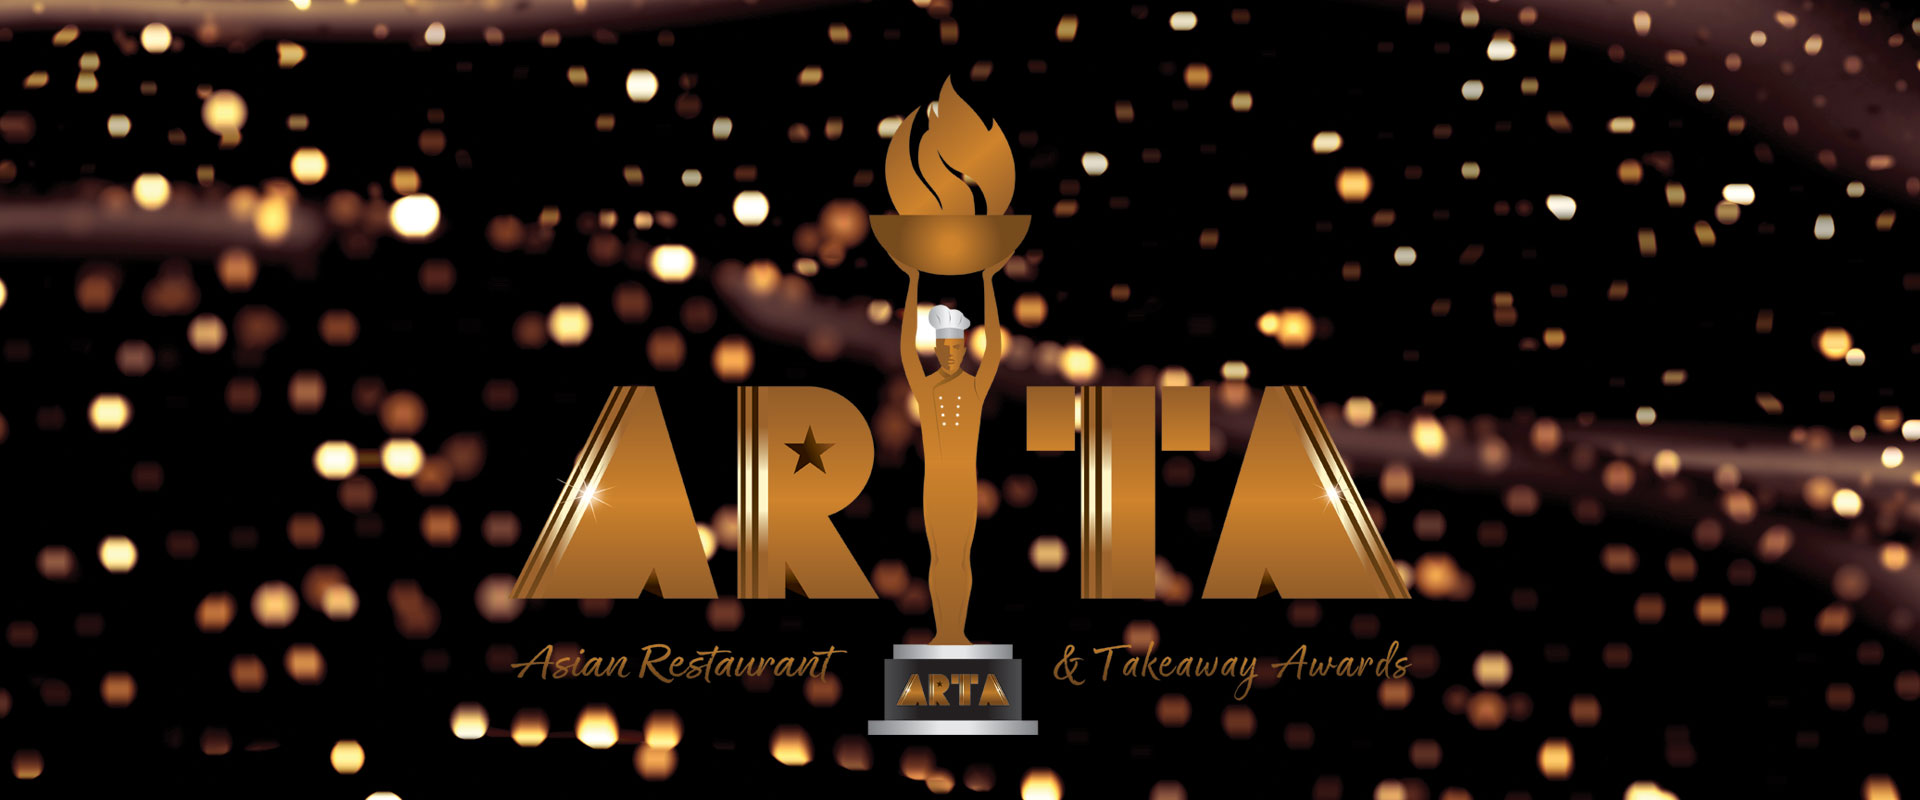 Asian Restaurant & Takeaway Awards (ARTA), London, United Kingdom